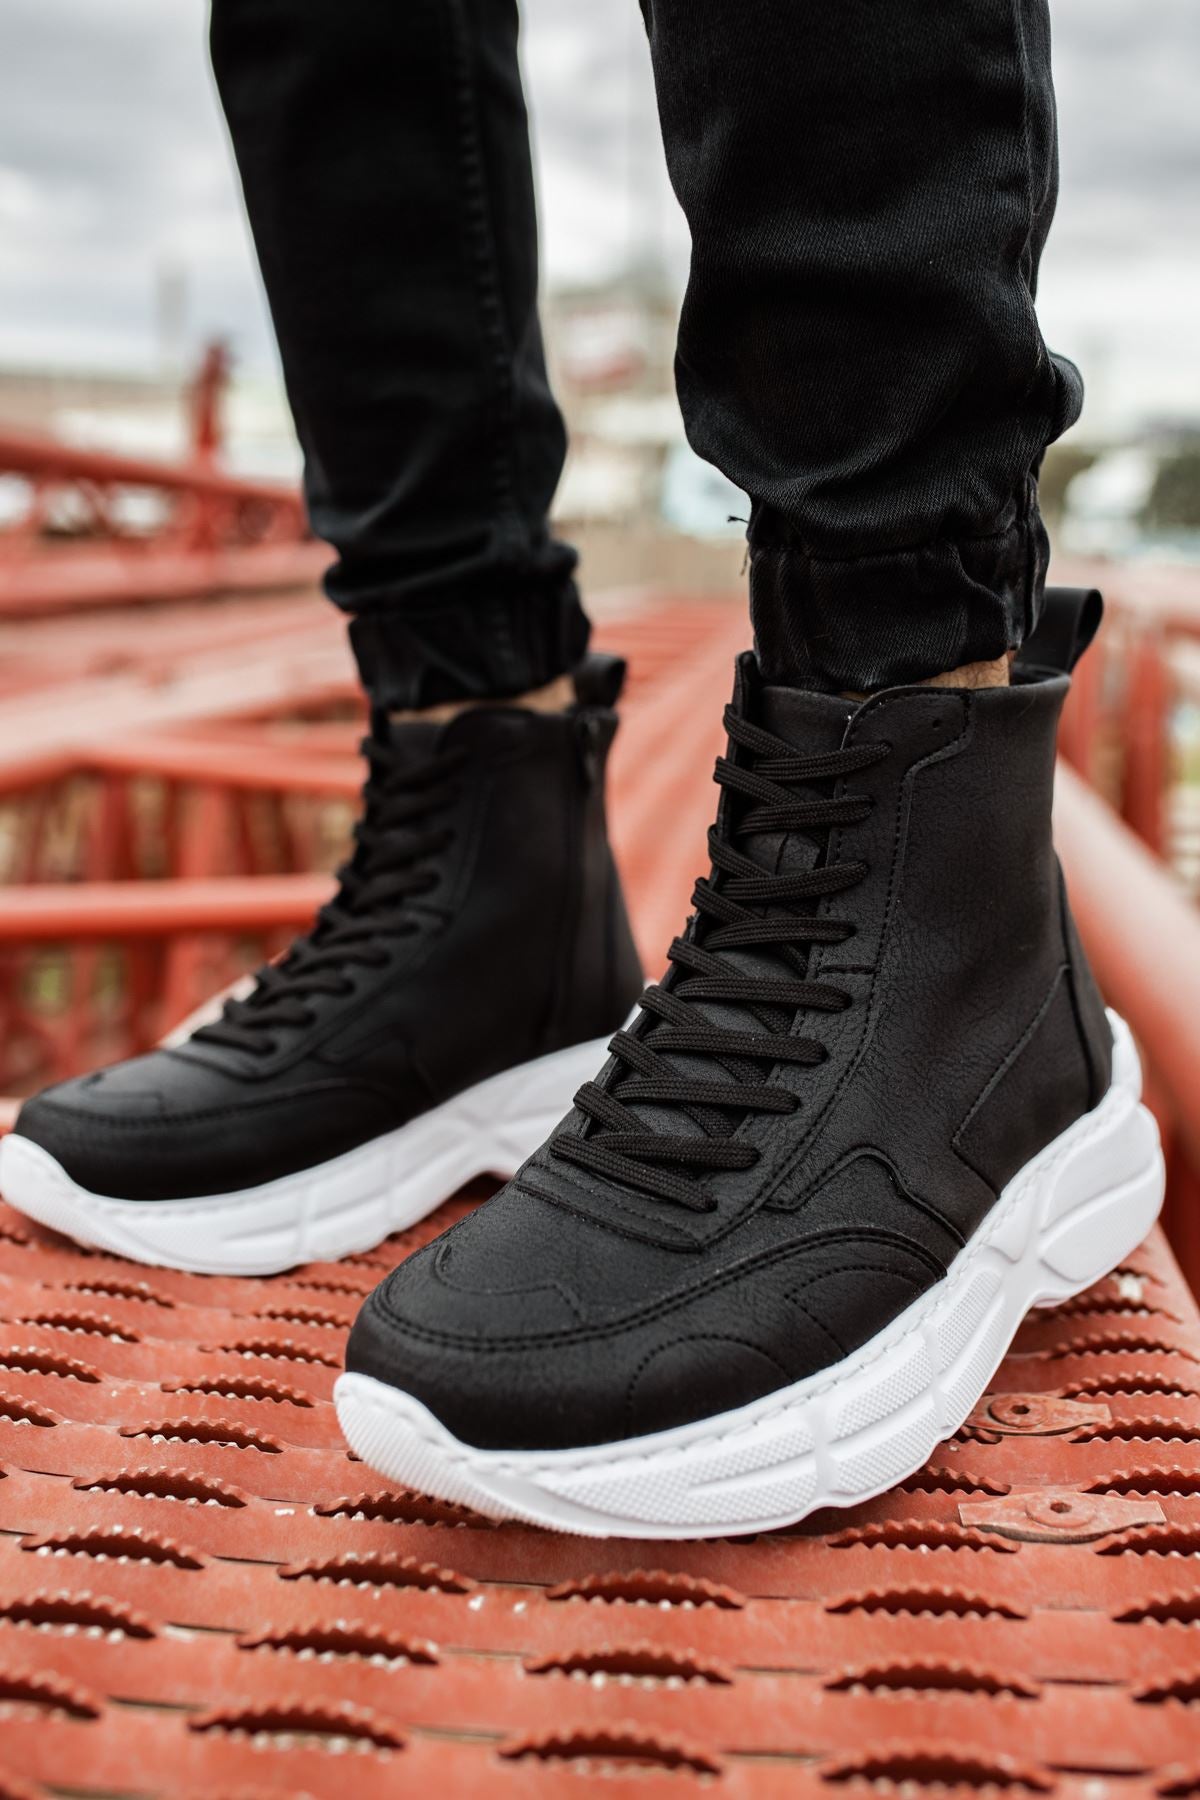 Original Design CH077 Men's Black-White Sole Casual Sneaker Sports Boots - STREETMODE ™